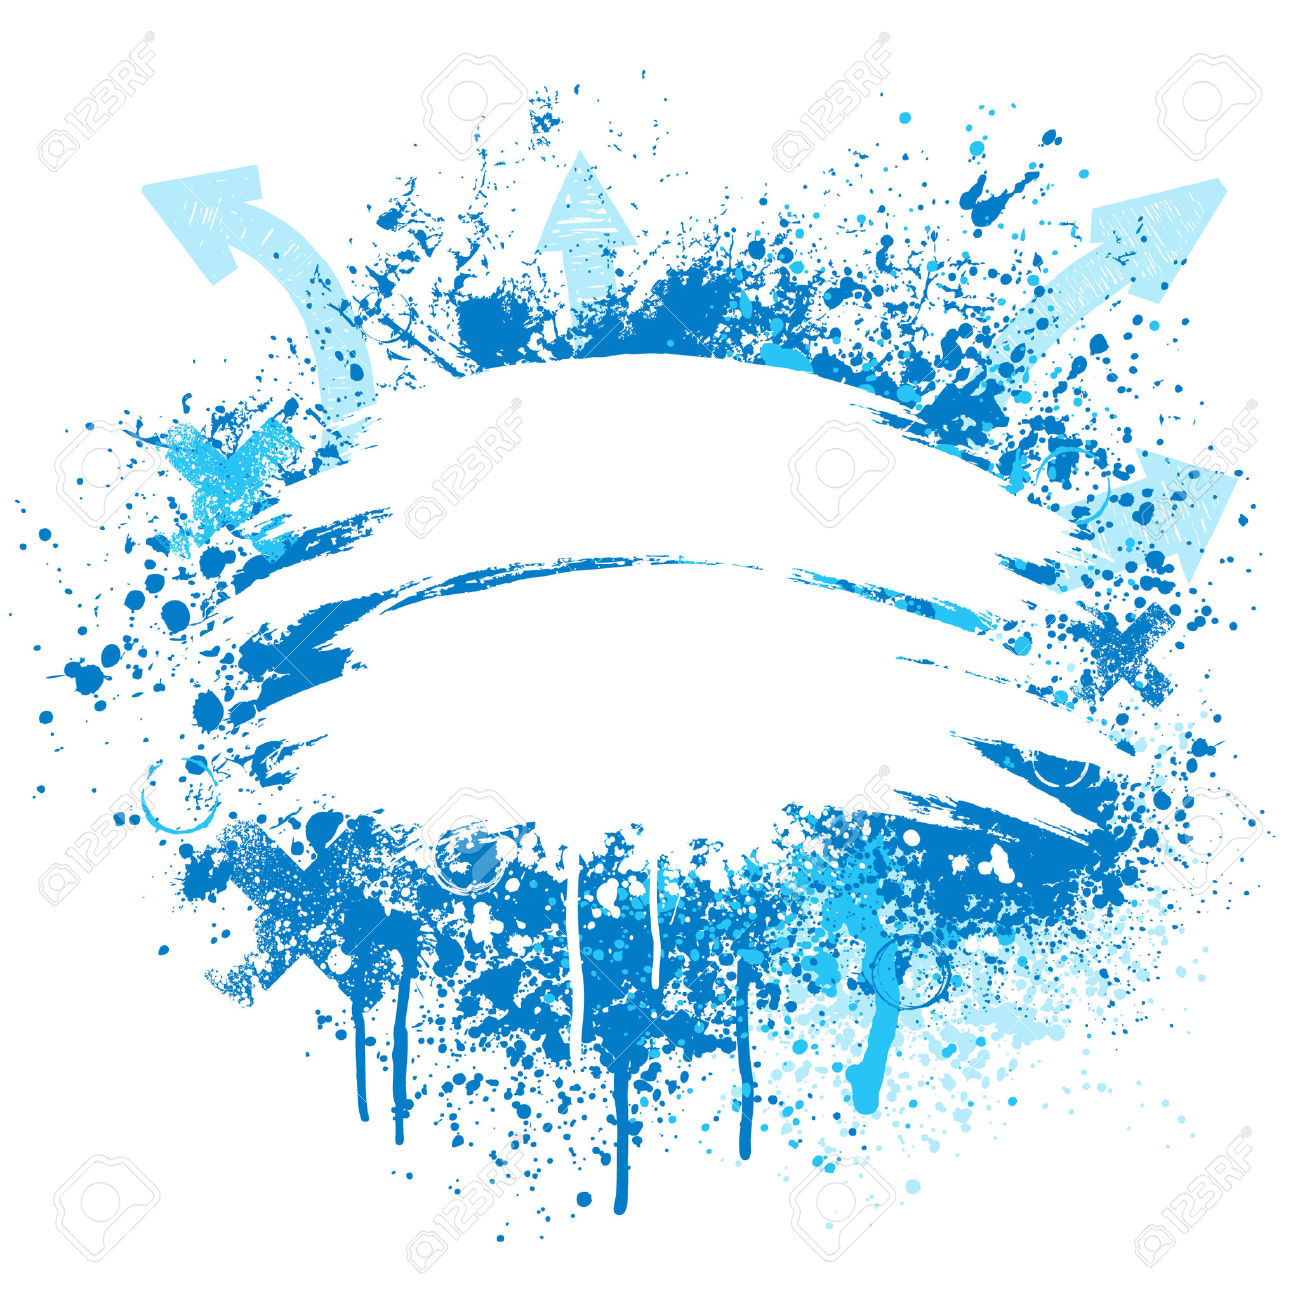 Light Blue And White Grunge Arrow Paint Splatter Design Royalty.